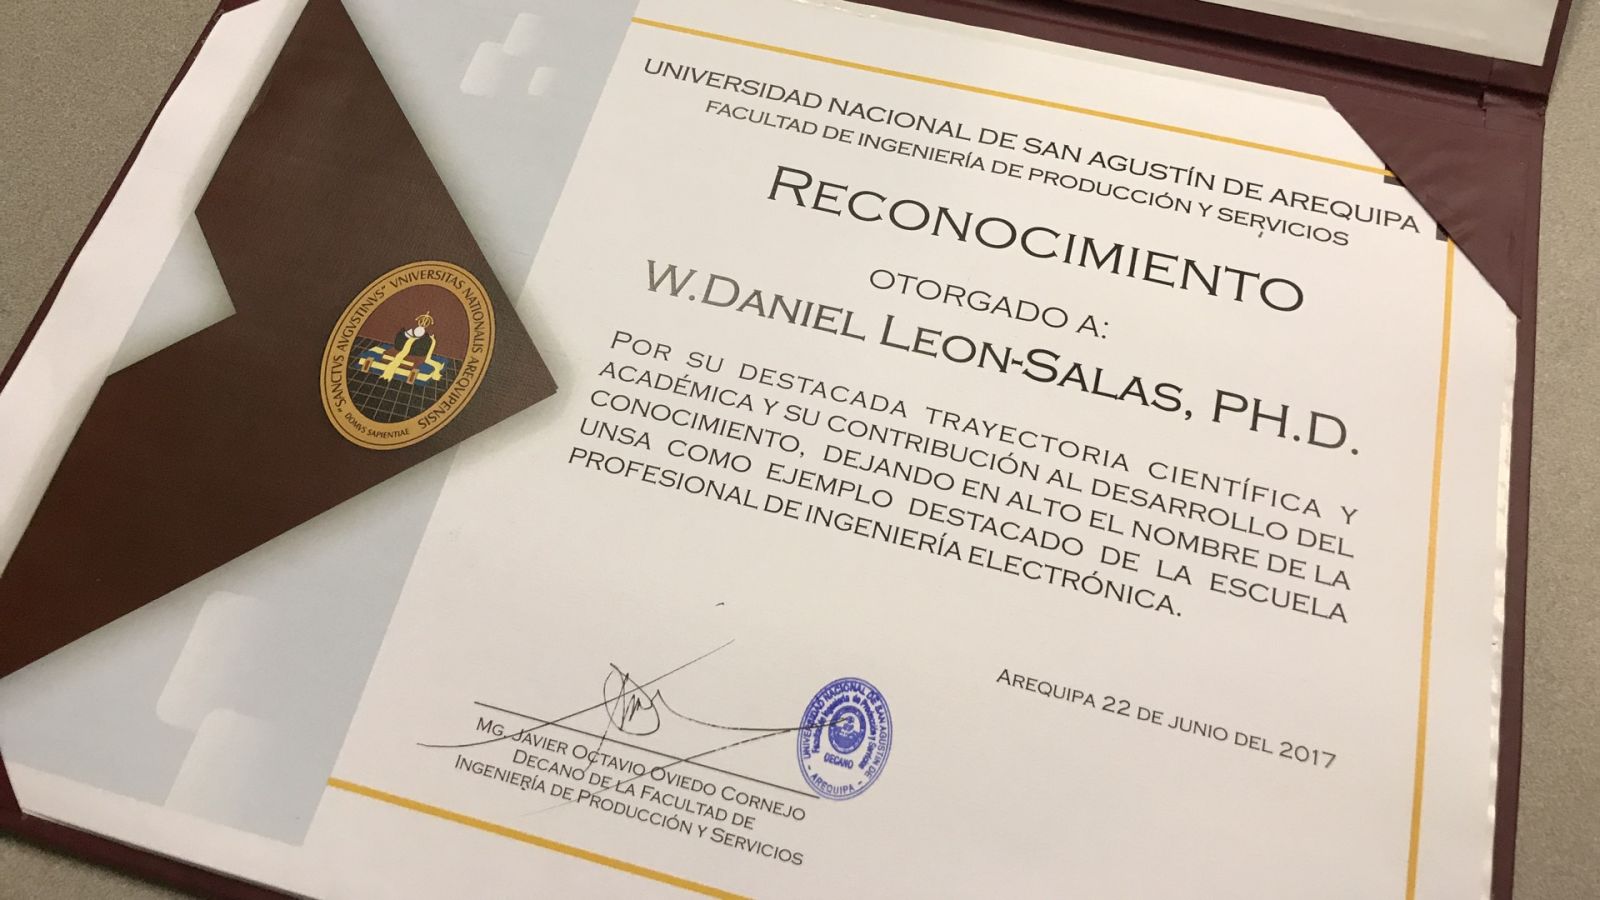 UNSA's certificate of recognition for Daniel Leon-Salas